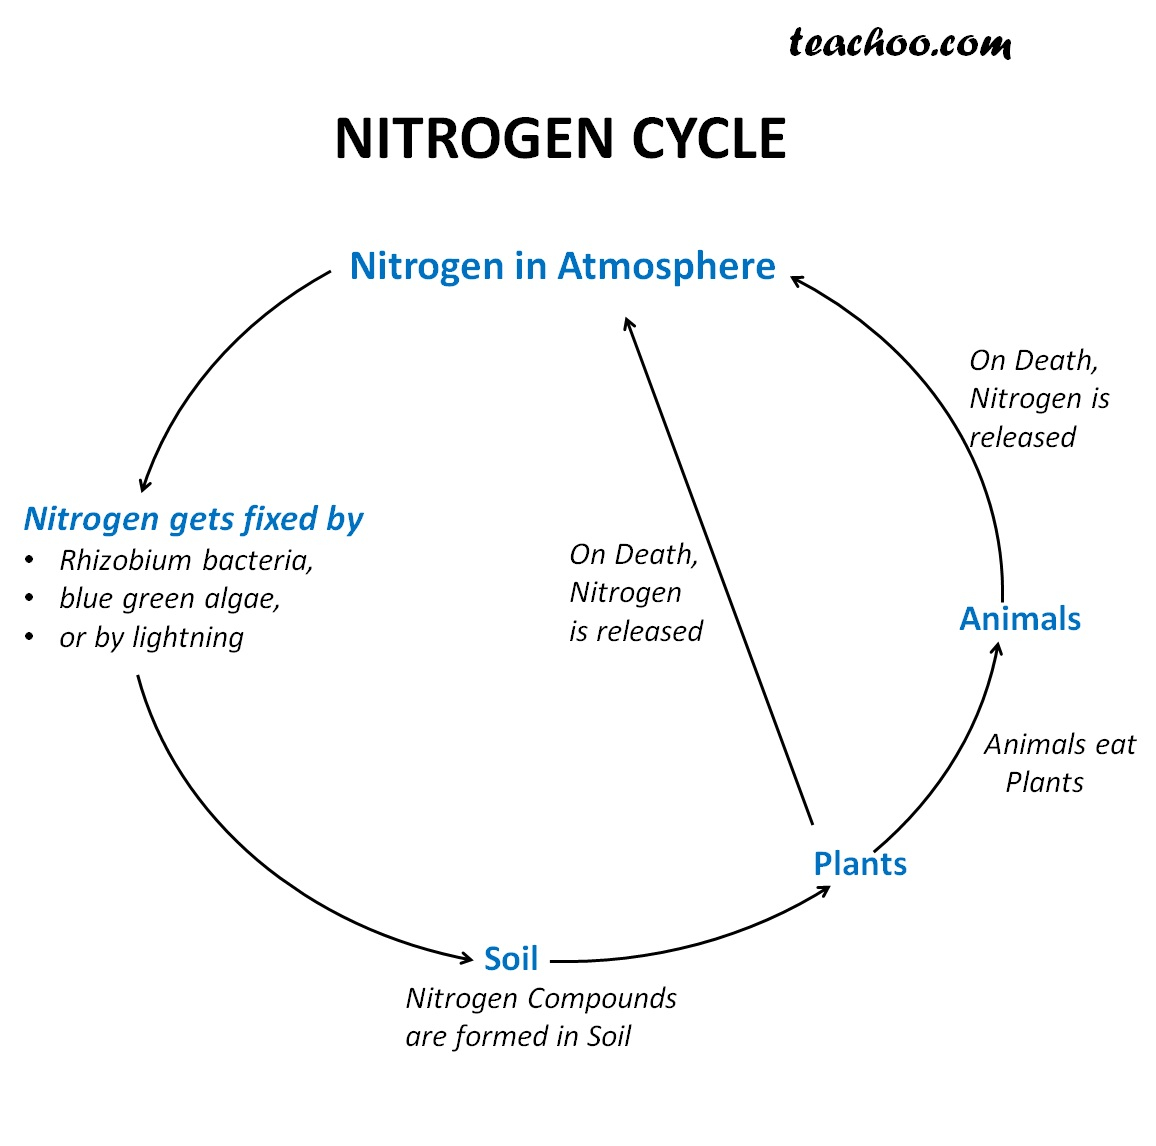 Nitrogen Cycle Diagram Nitrogen Cycle Diagram With Steps Explained Teachoo Concepts